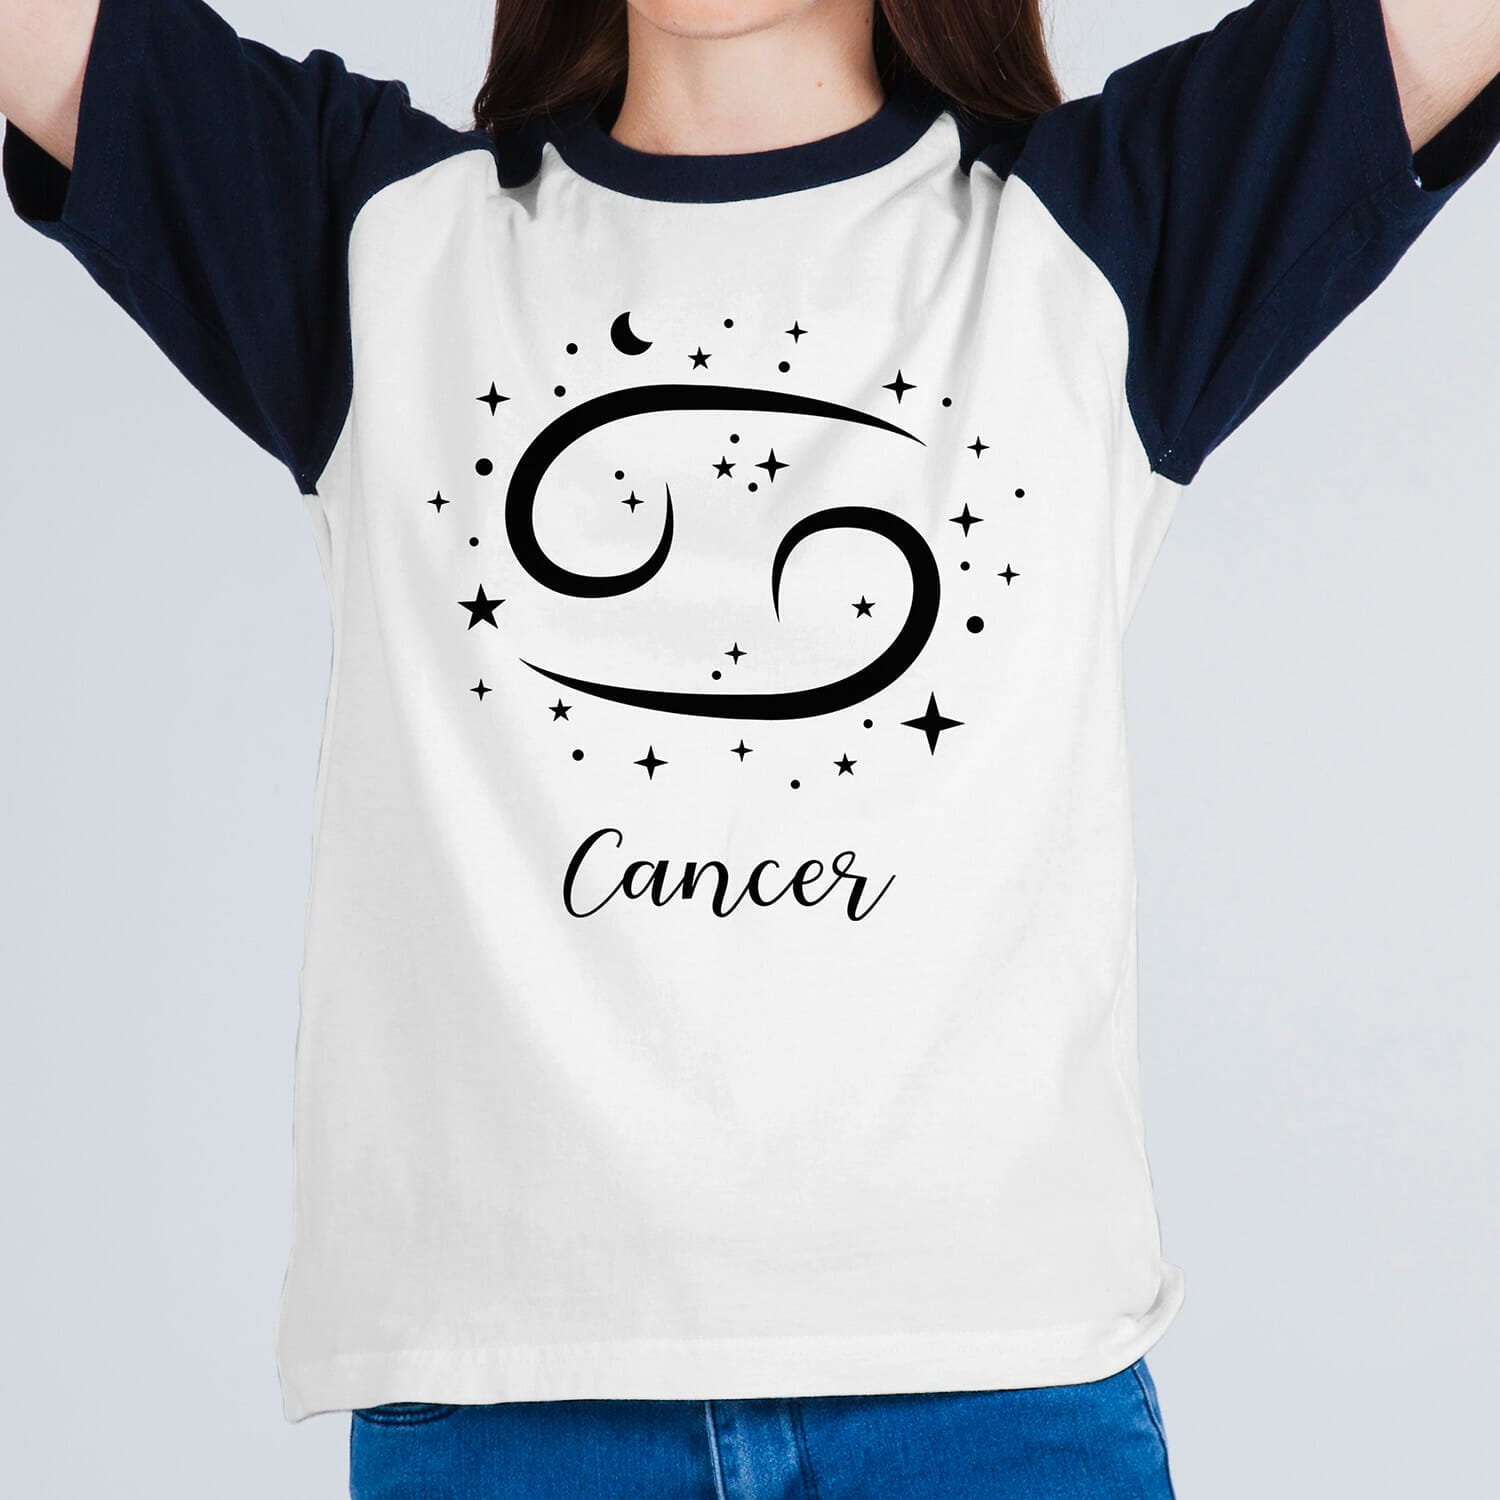 Cancer horoscope Tshirt design